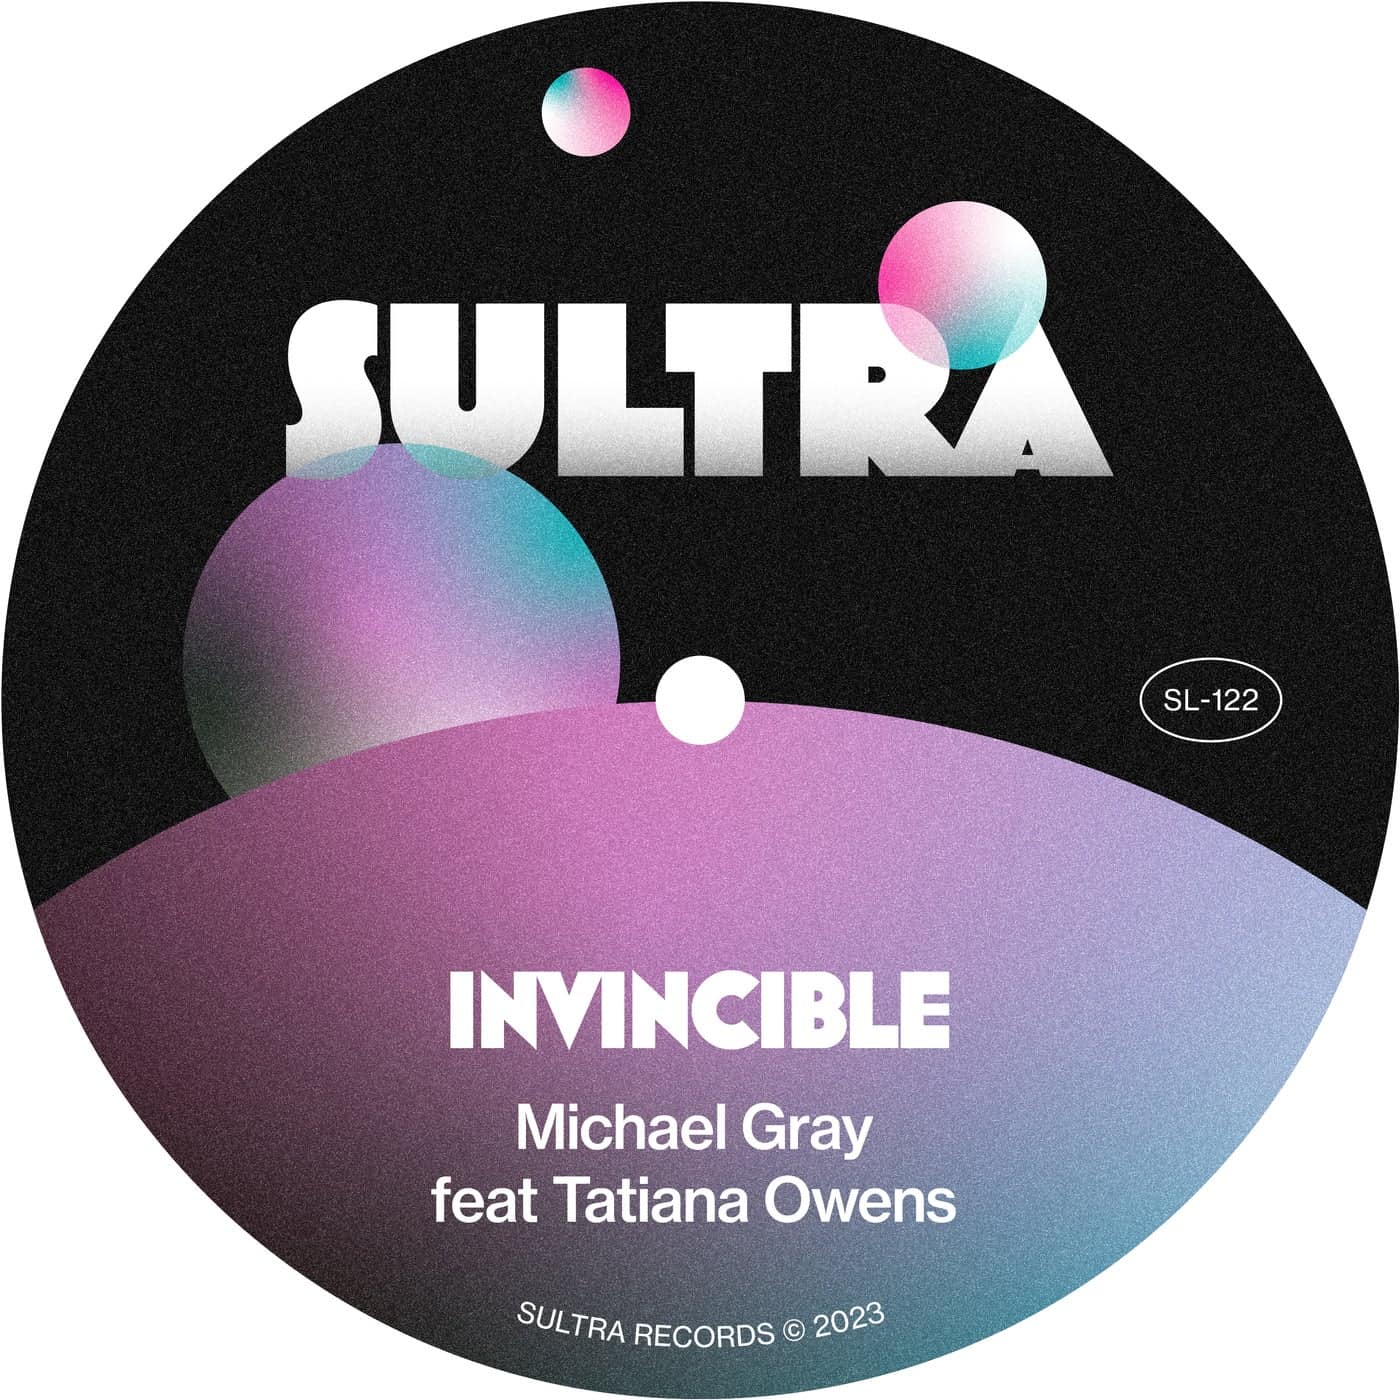 image cover: Michael Gray, Tatiana Owens - Invincible - Original Mix / Sultra Records